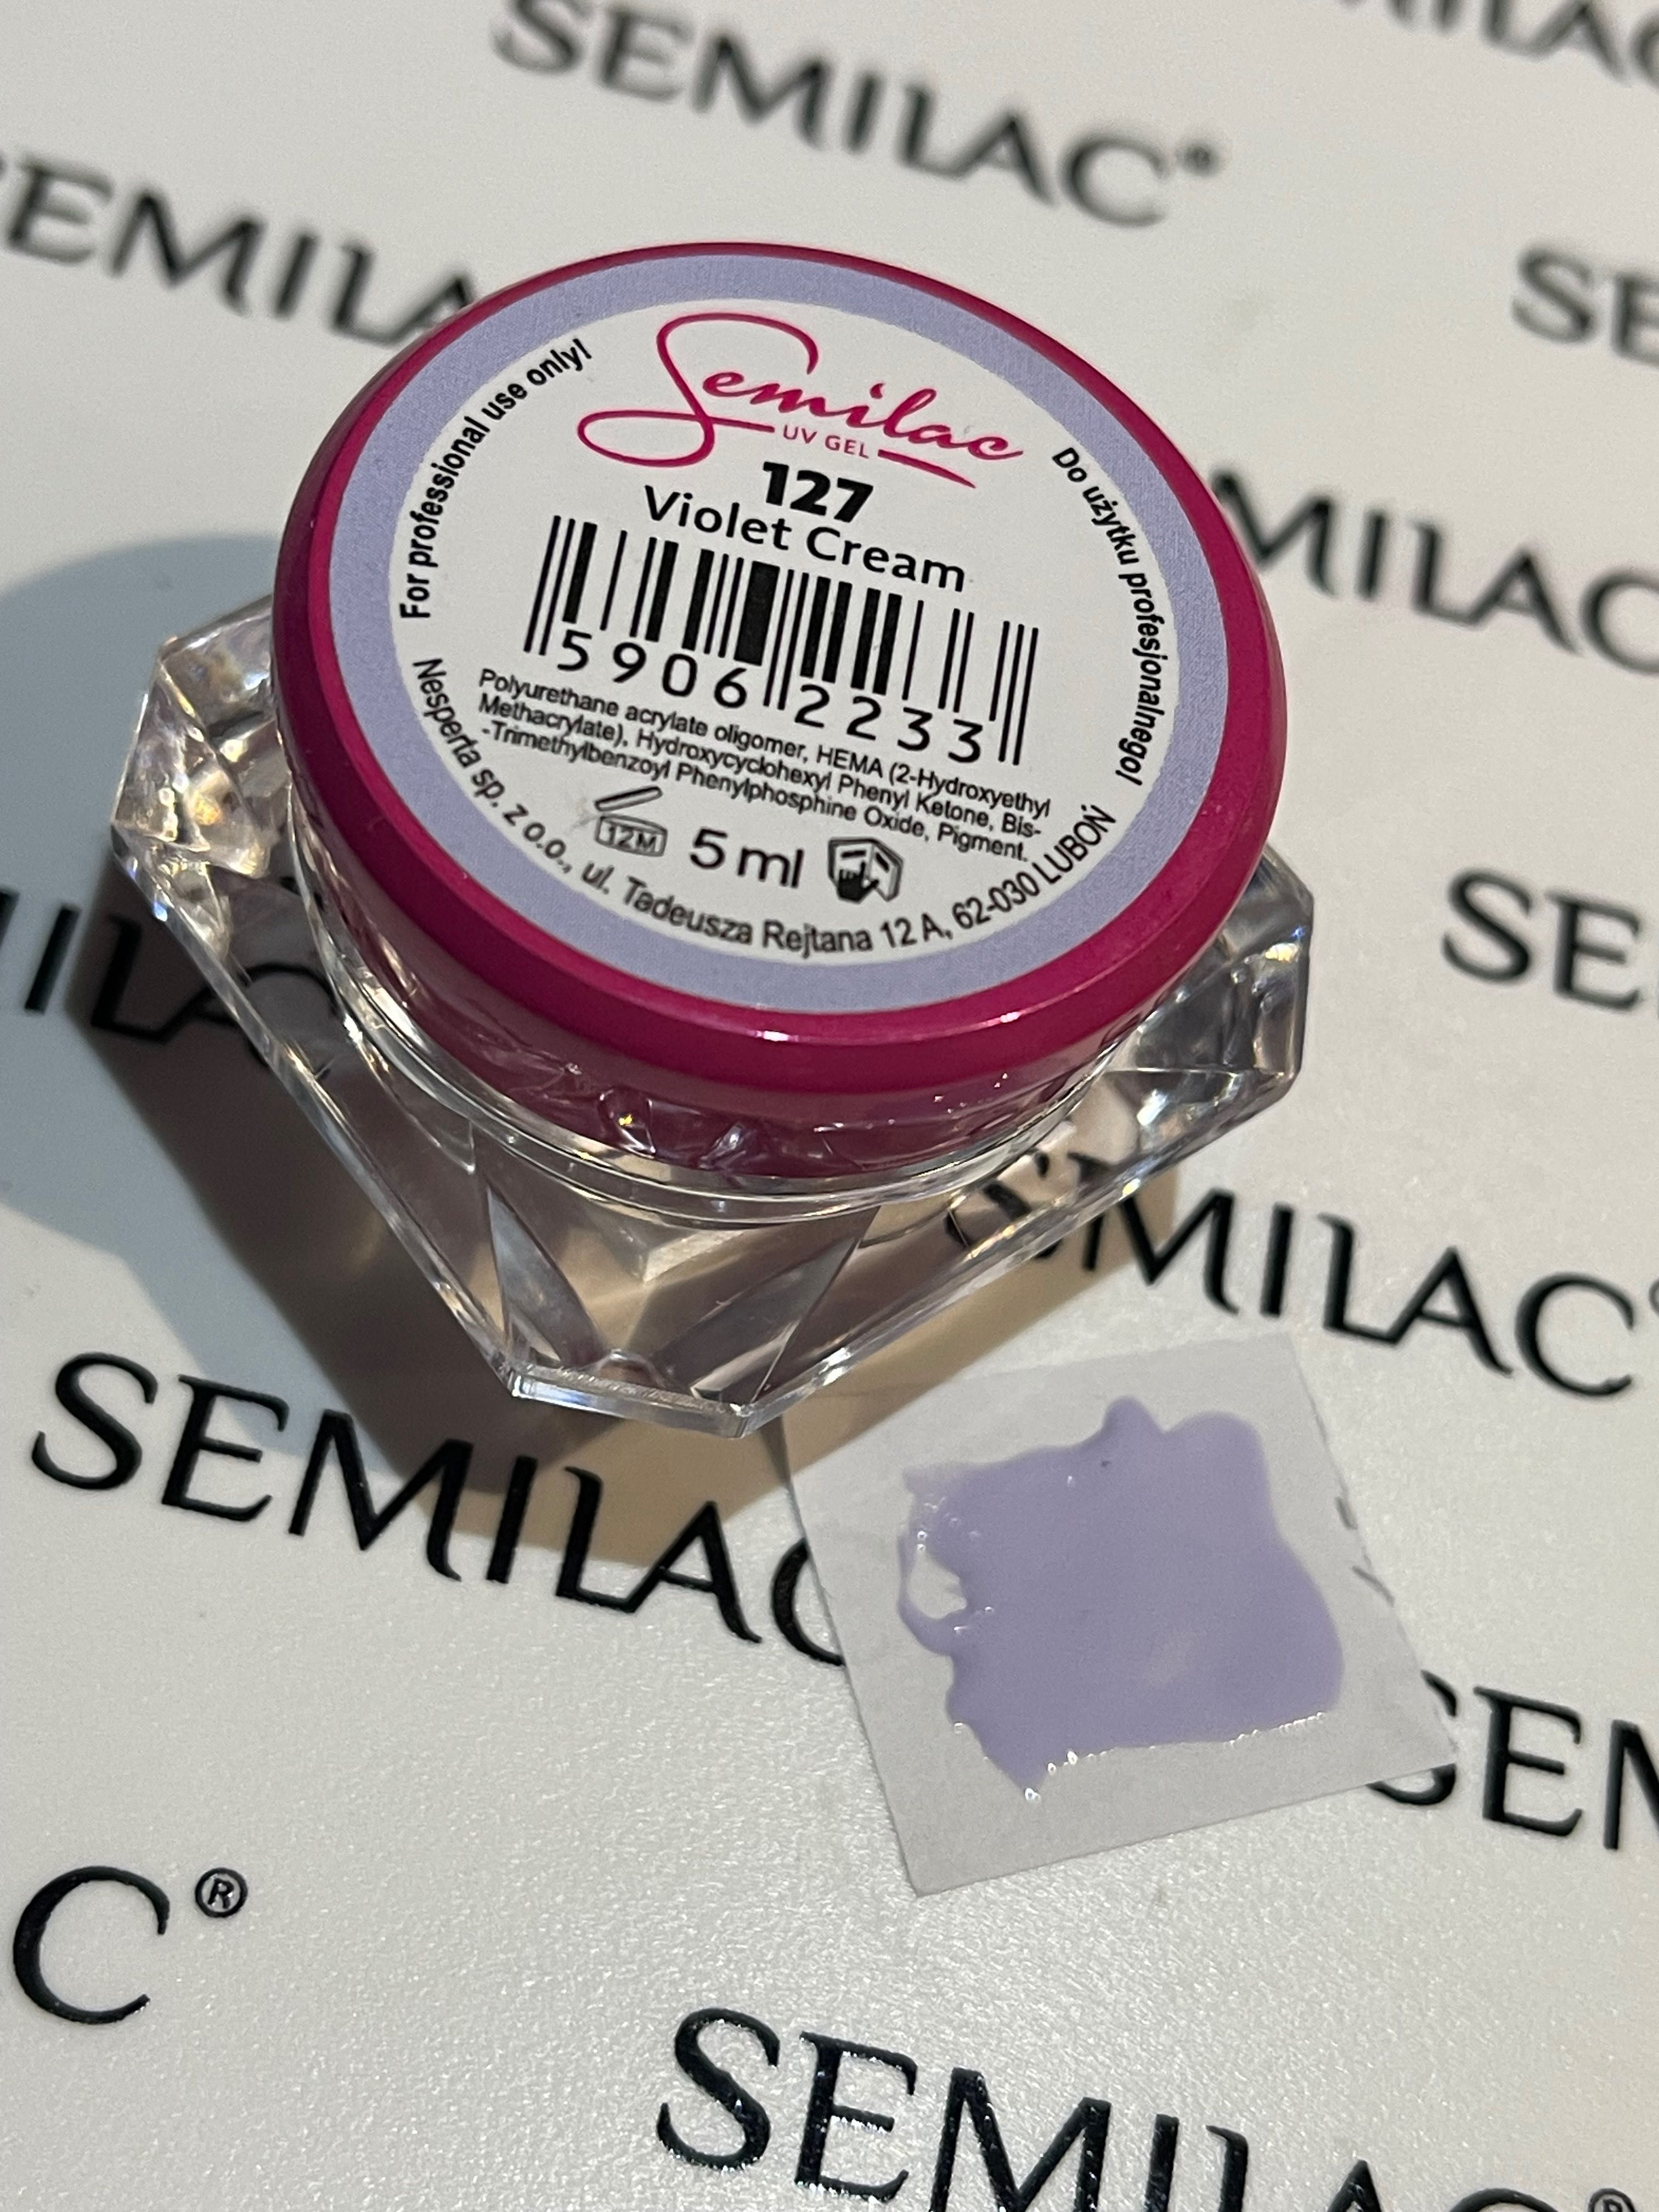 Semilac - żel do paznokci - 127 Violet Cream